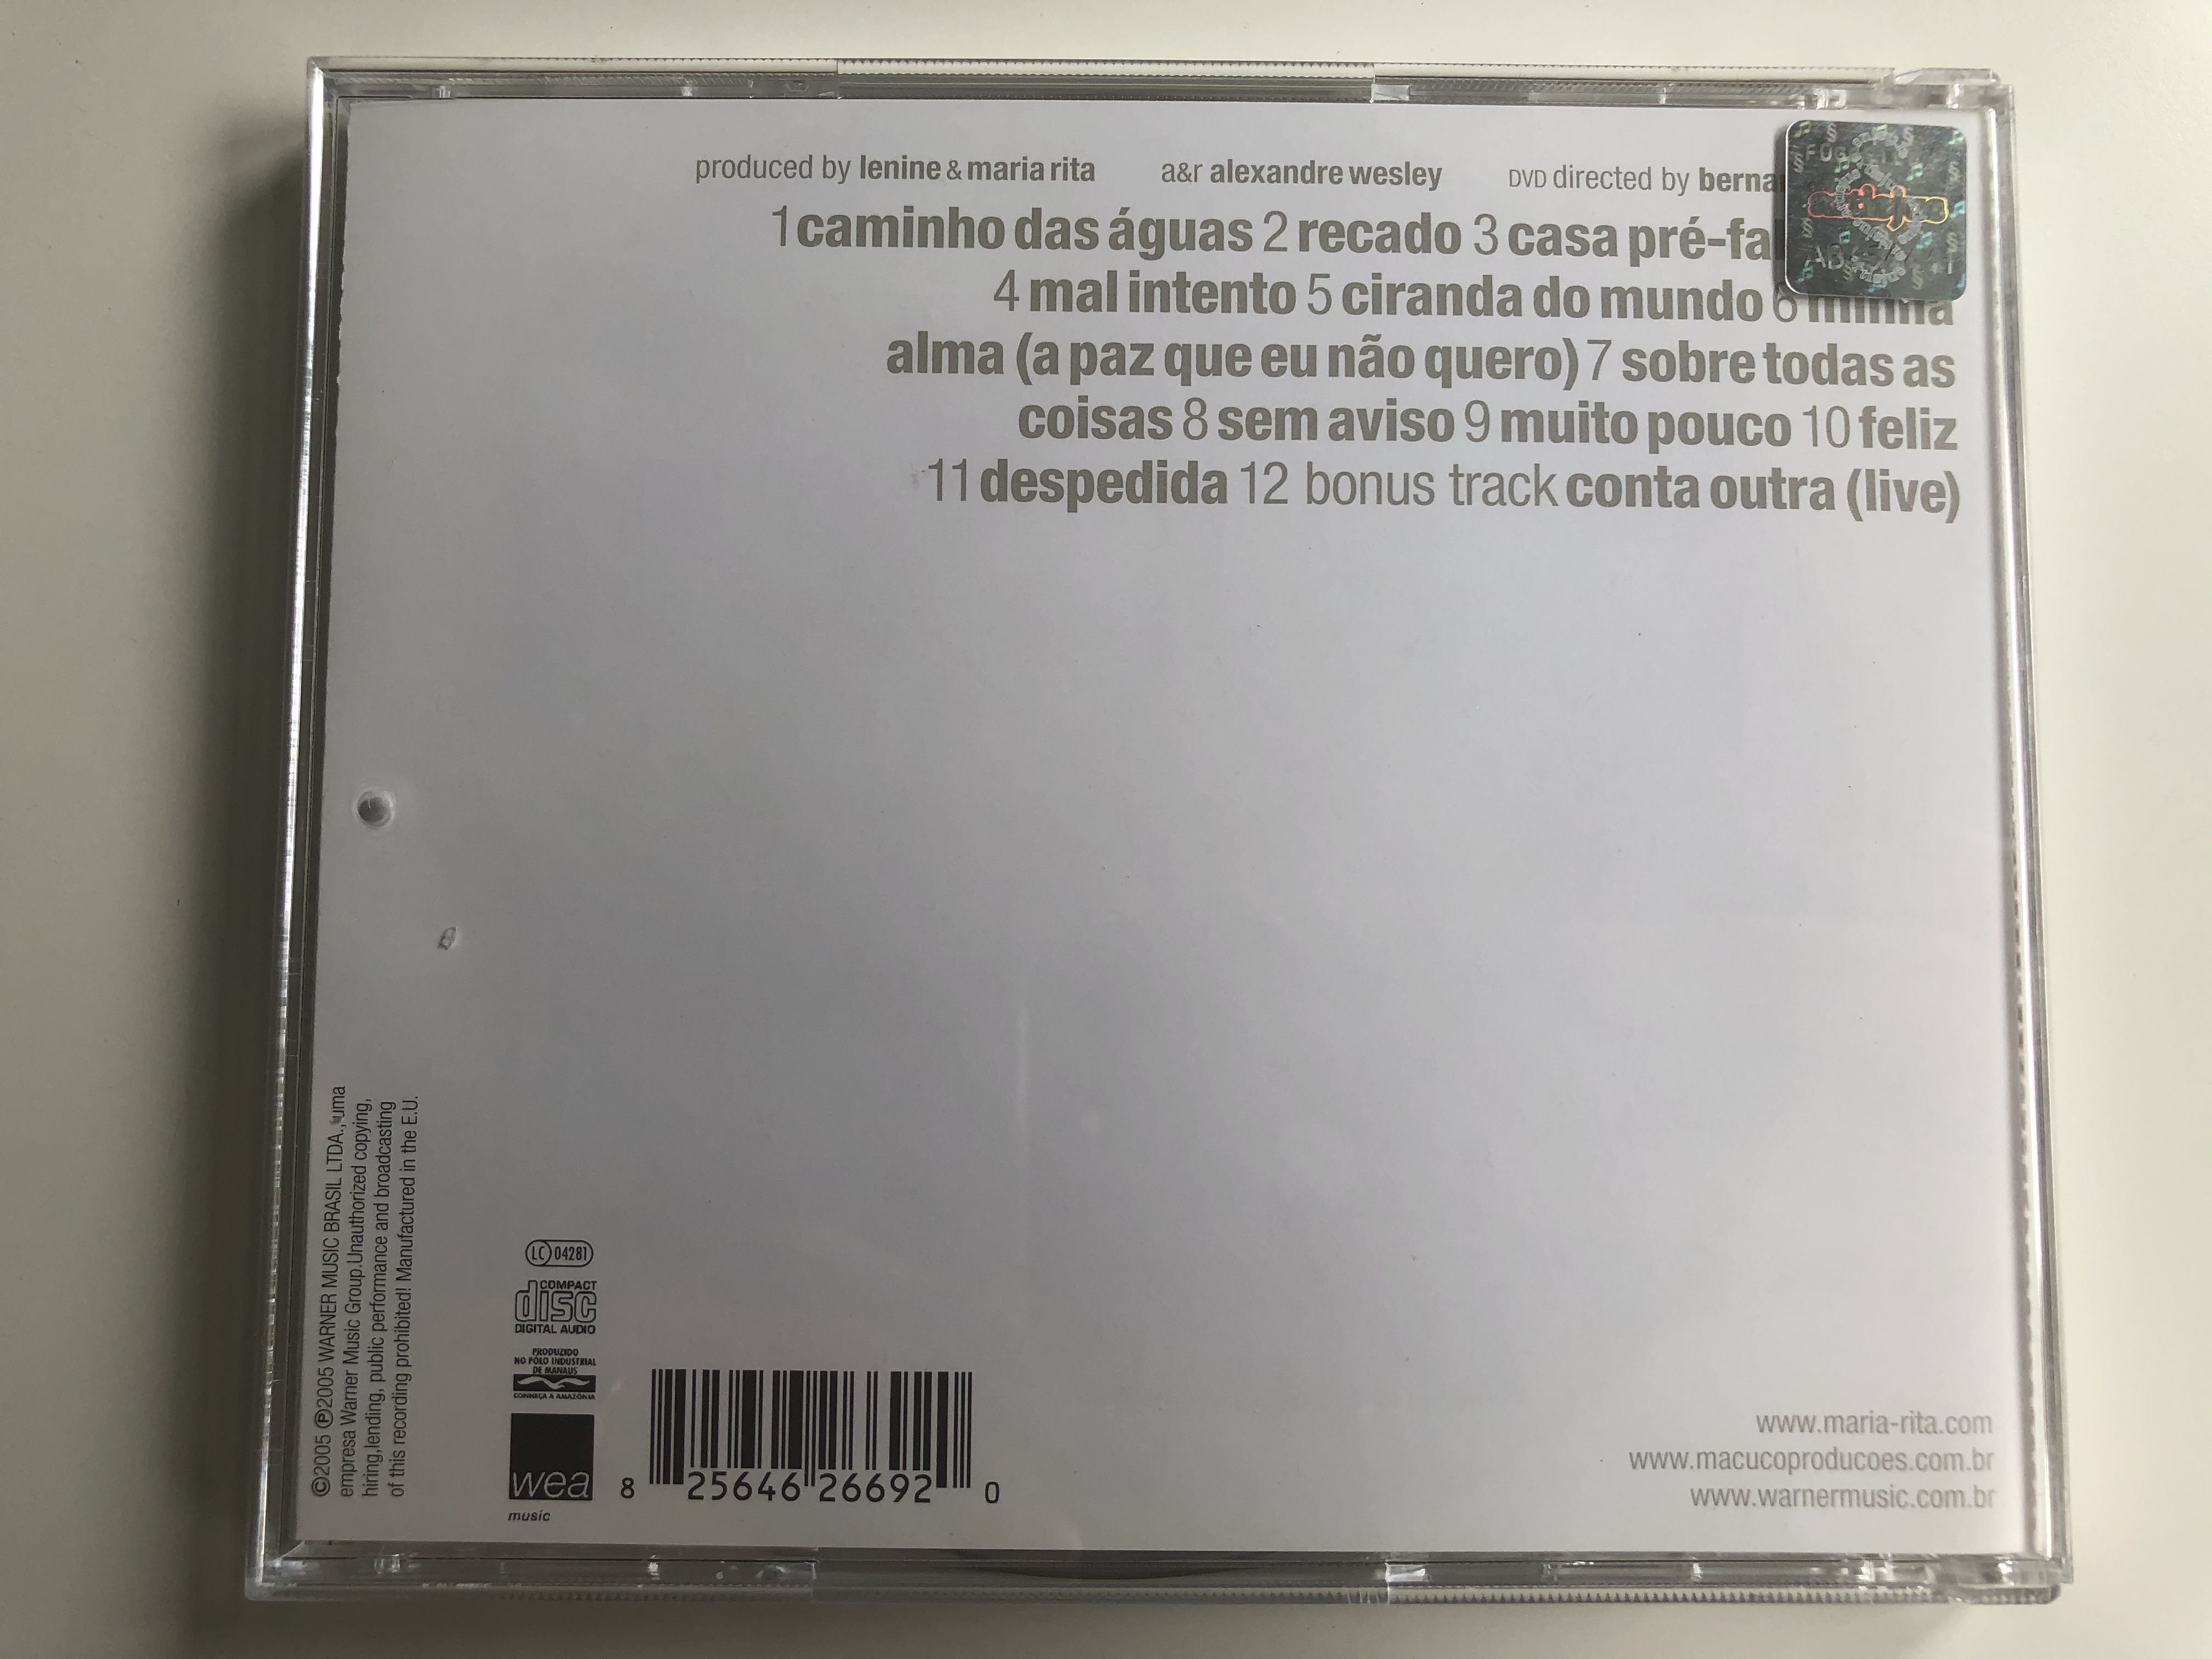 maria-rita-segundo-wea-music-audio-cd-2005-256462669-2-7-.jpg